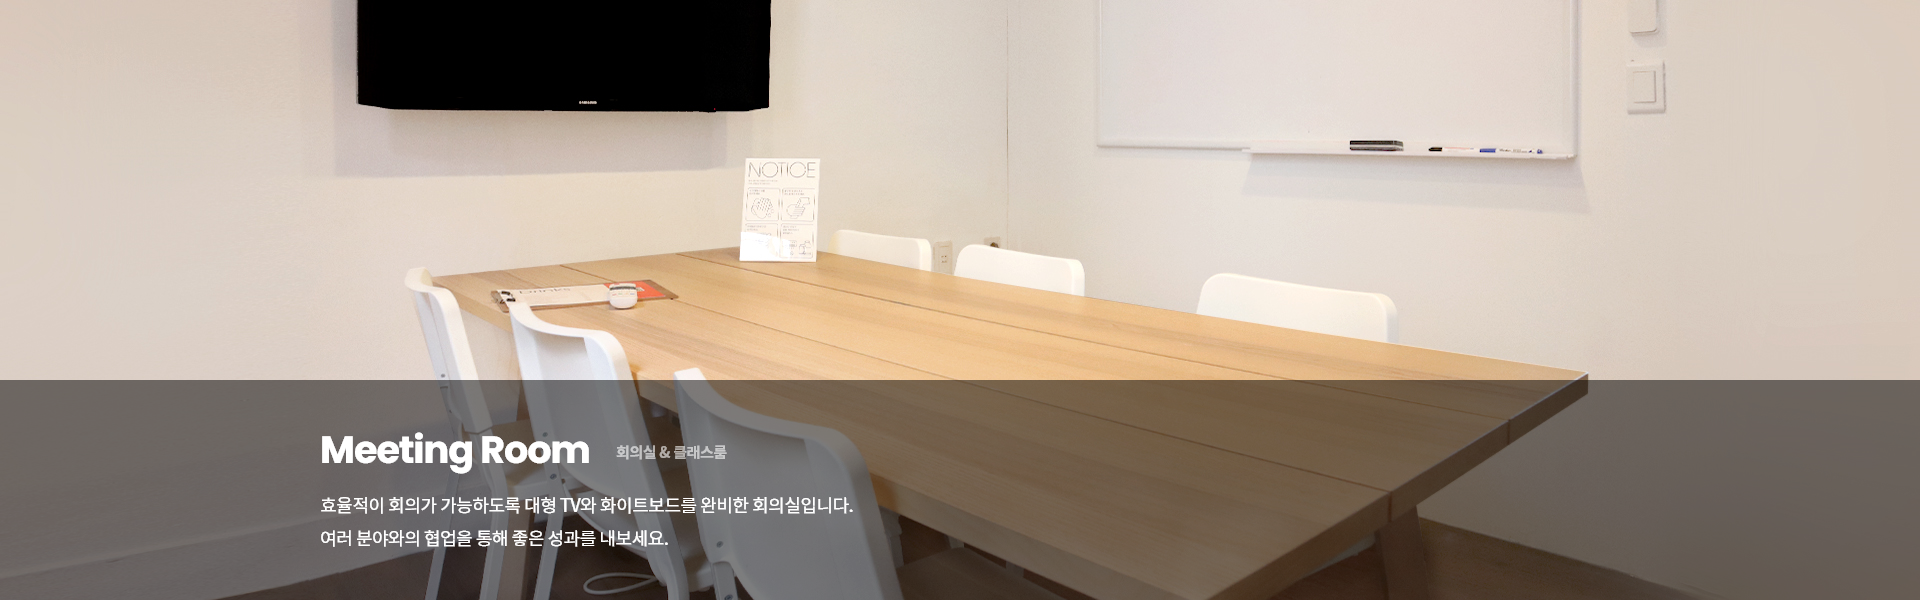 meetingroom-image